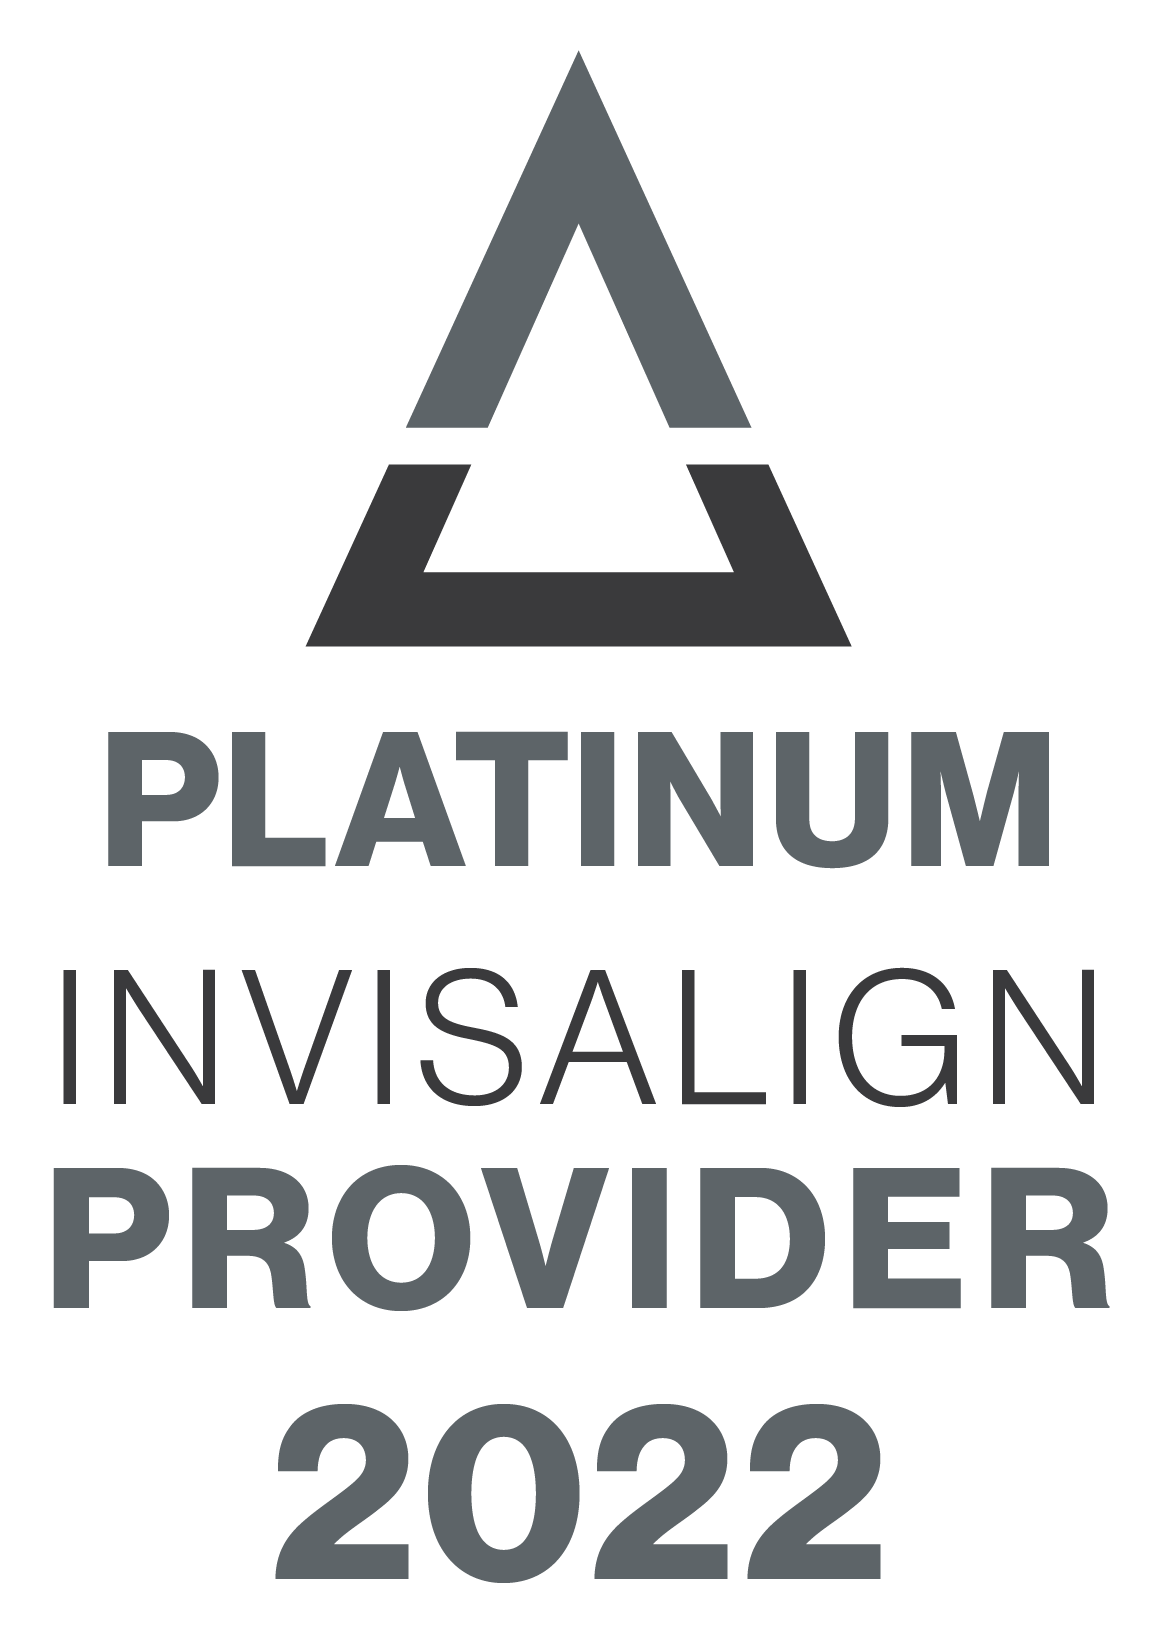 Platinum Invisalign Provider 2022 logo